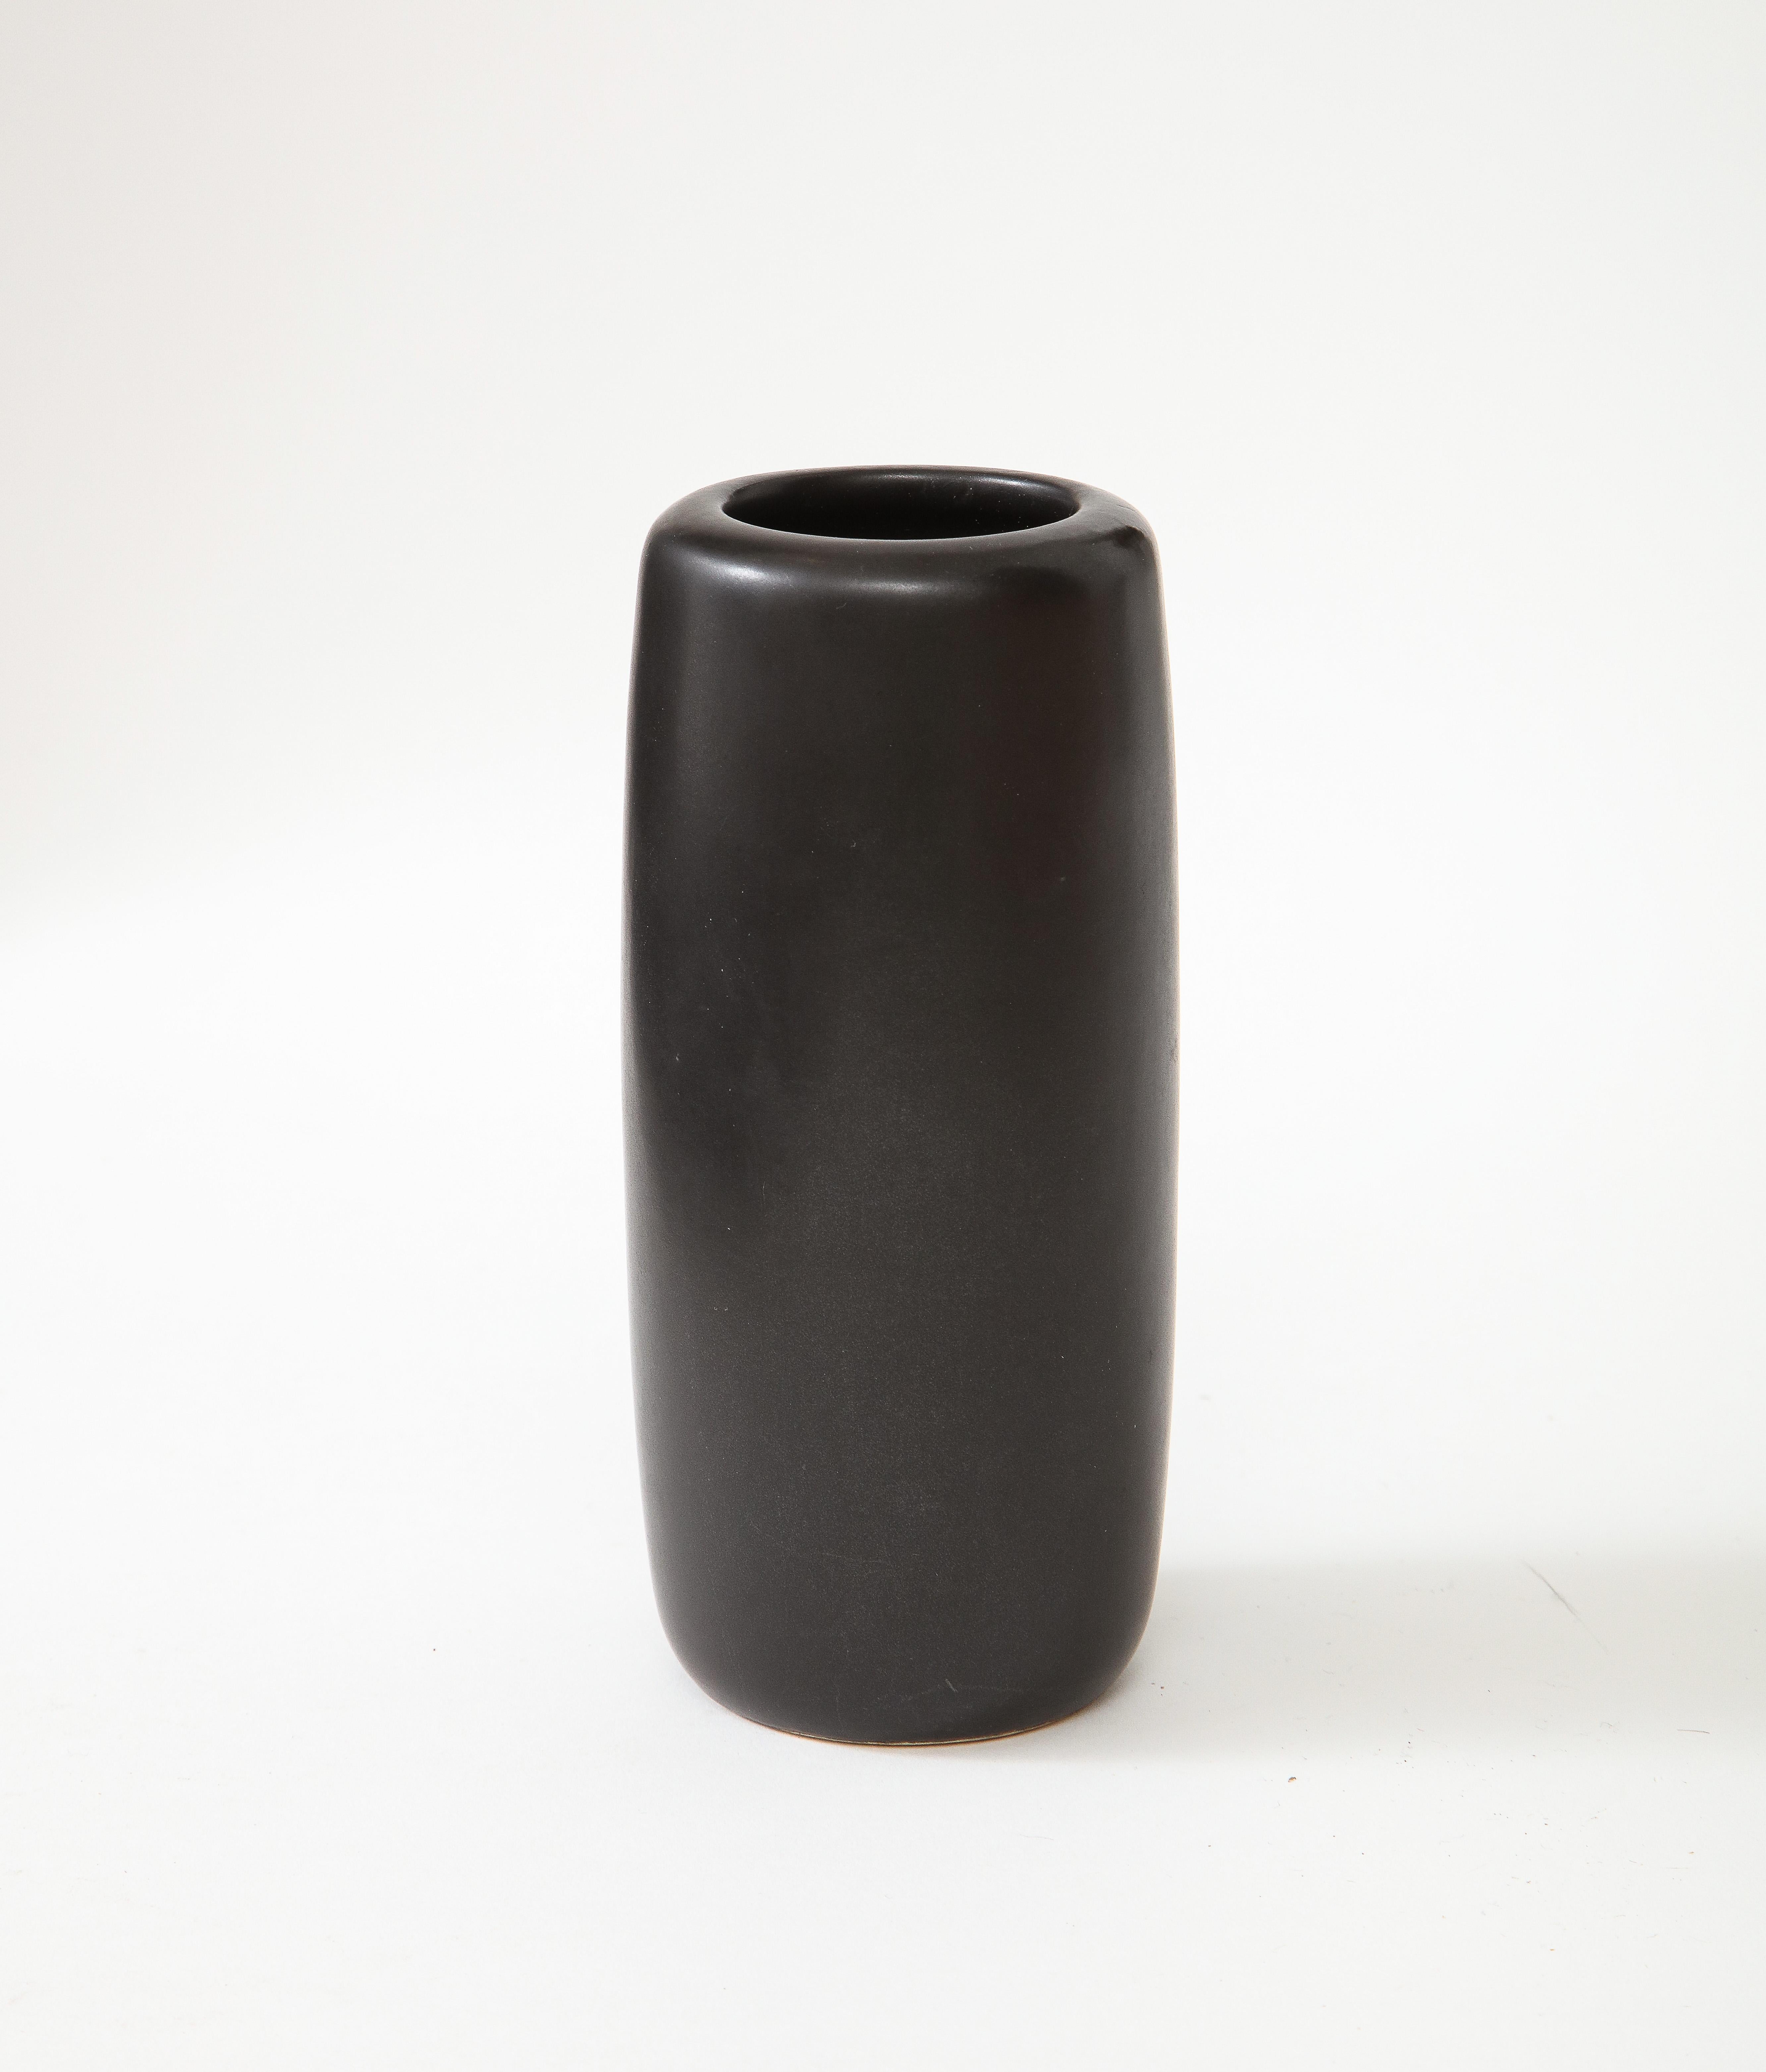 J. B. Matte Black Modern Vase, Signé, c. 1960
Céramique
H : 6 Diam. 2.75 in.